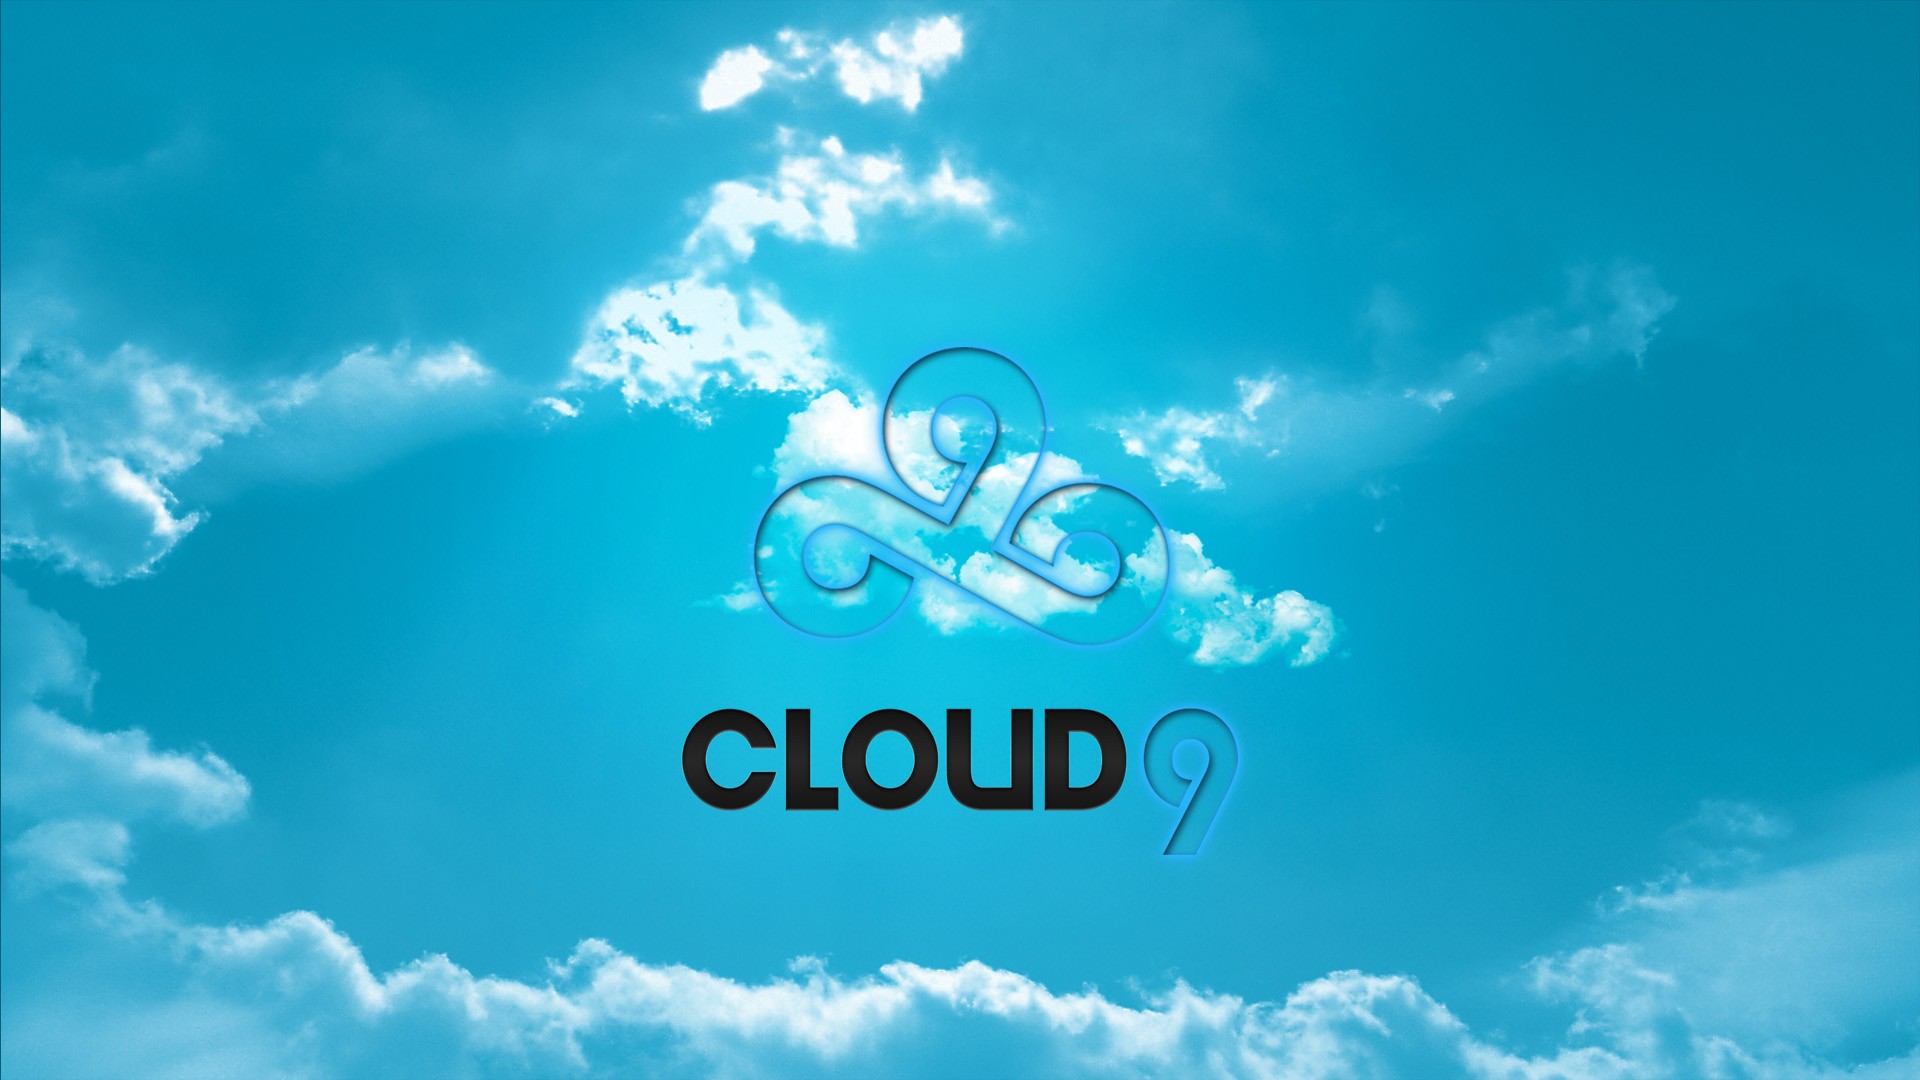 HD Cloud9 Backgrounds 1920x1080